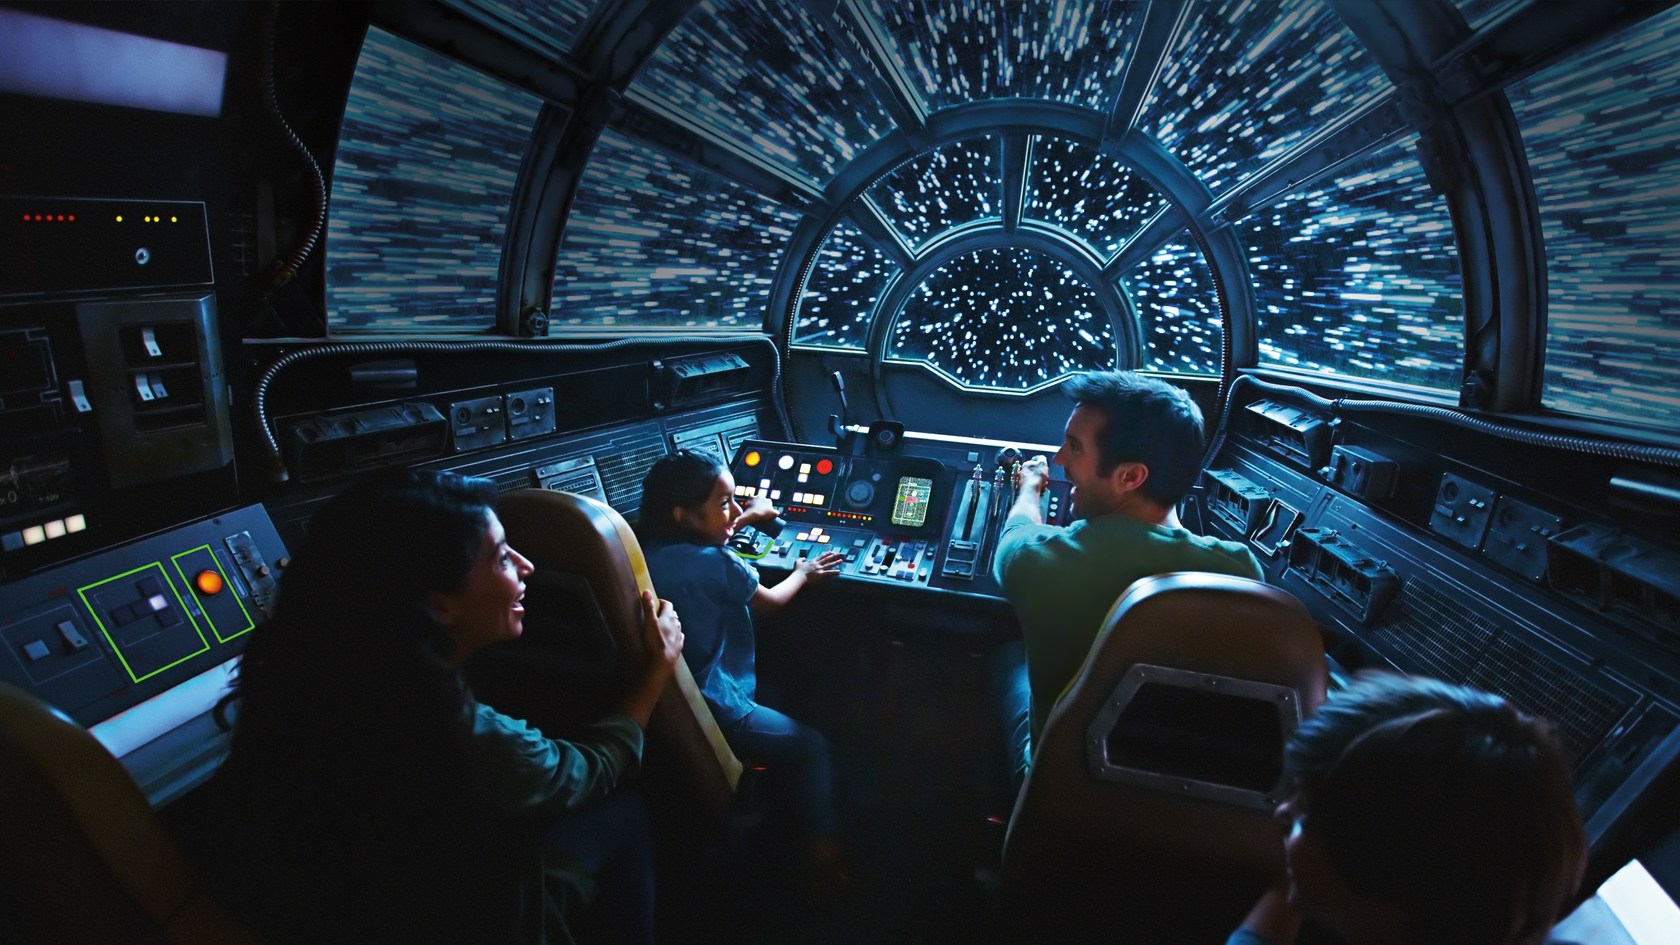 [NEWS] Disney Parks' 'Star Wars: Galaxy's Edge' Lands Get Opening Dates